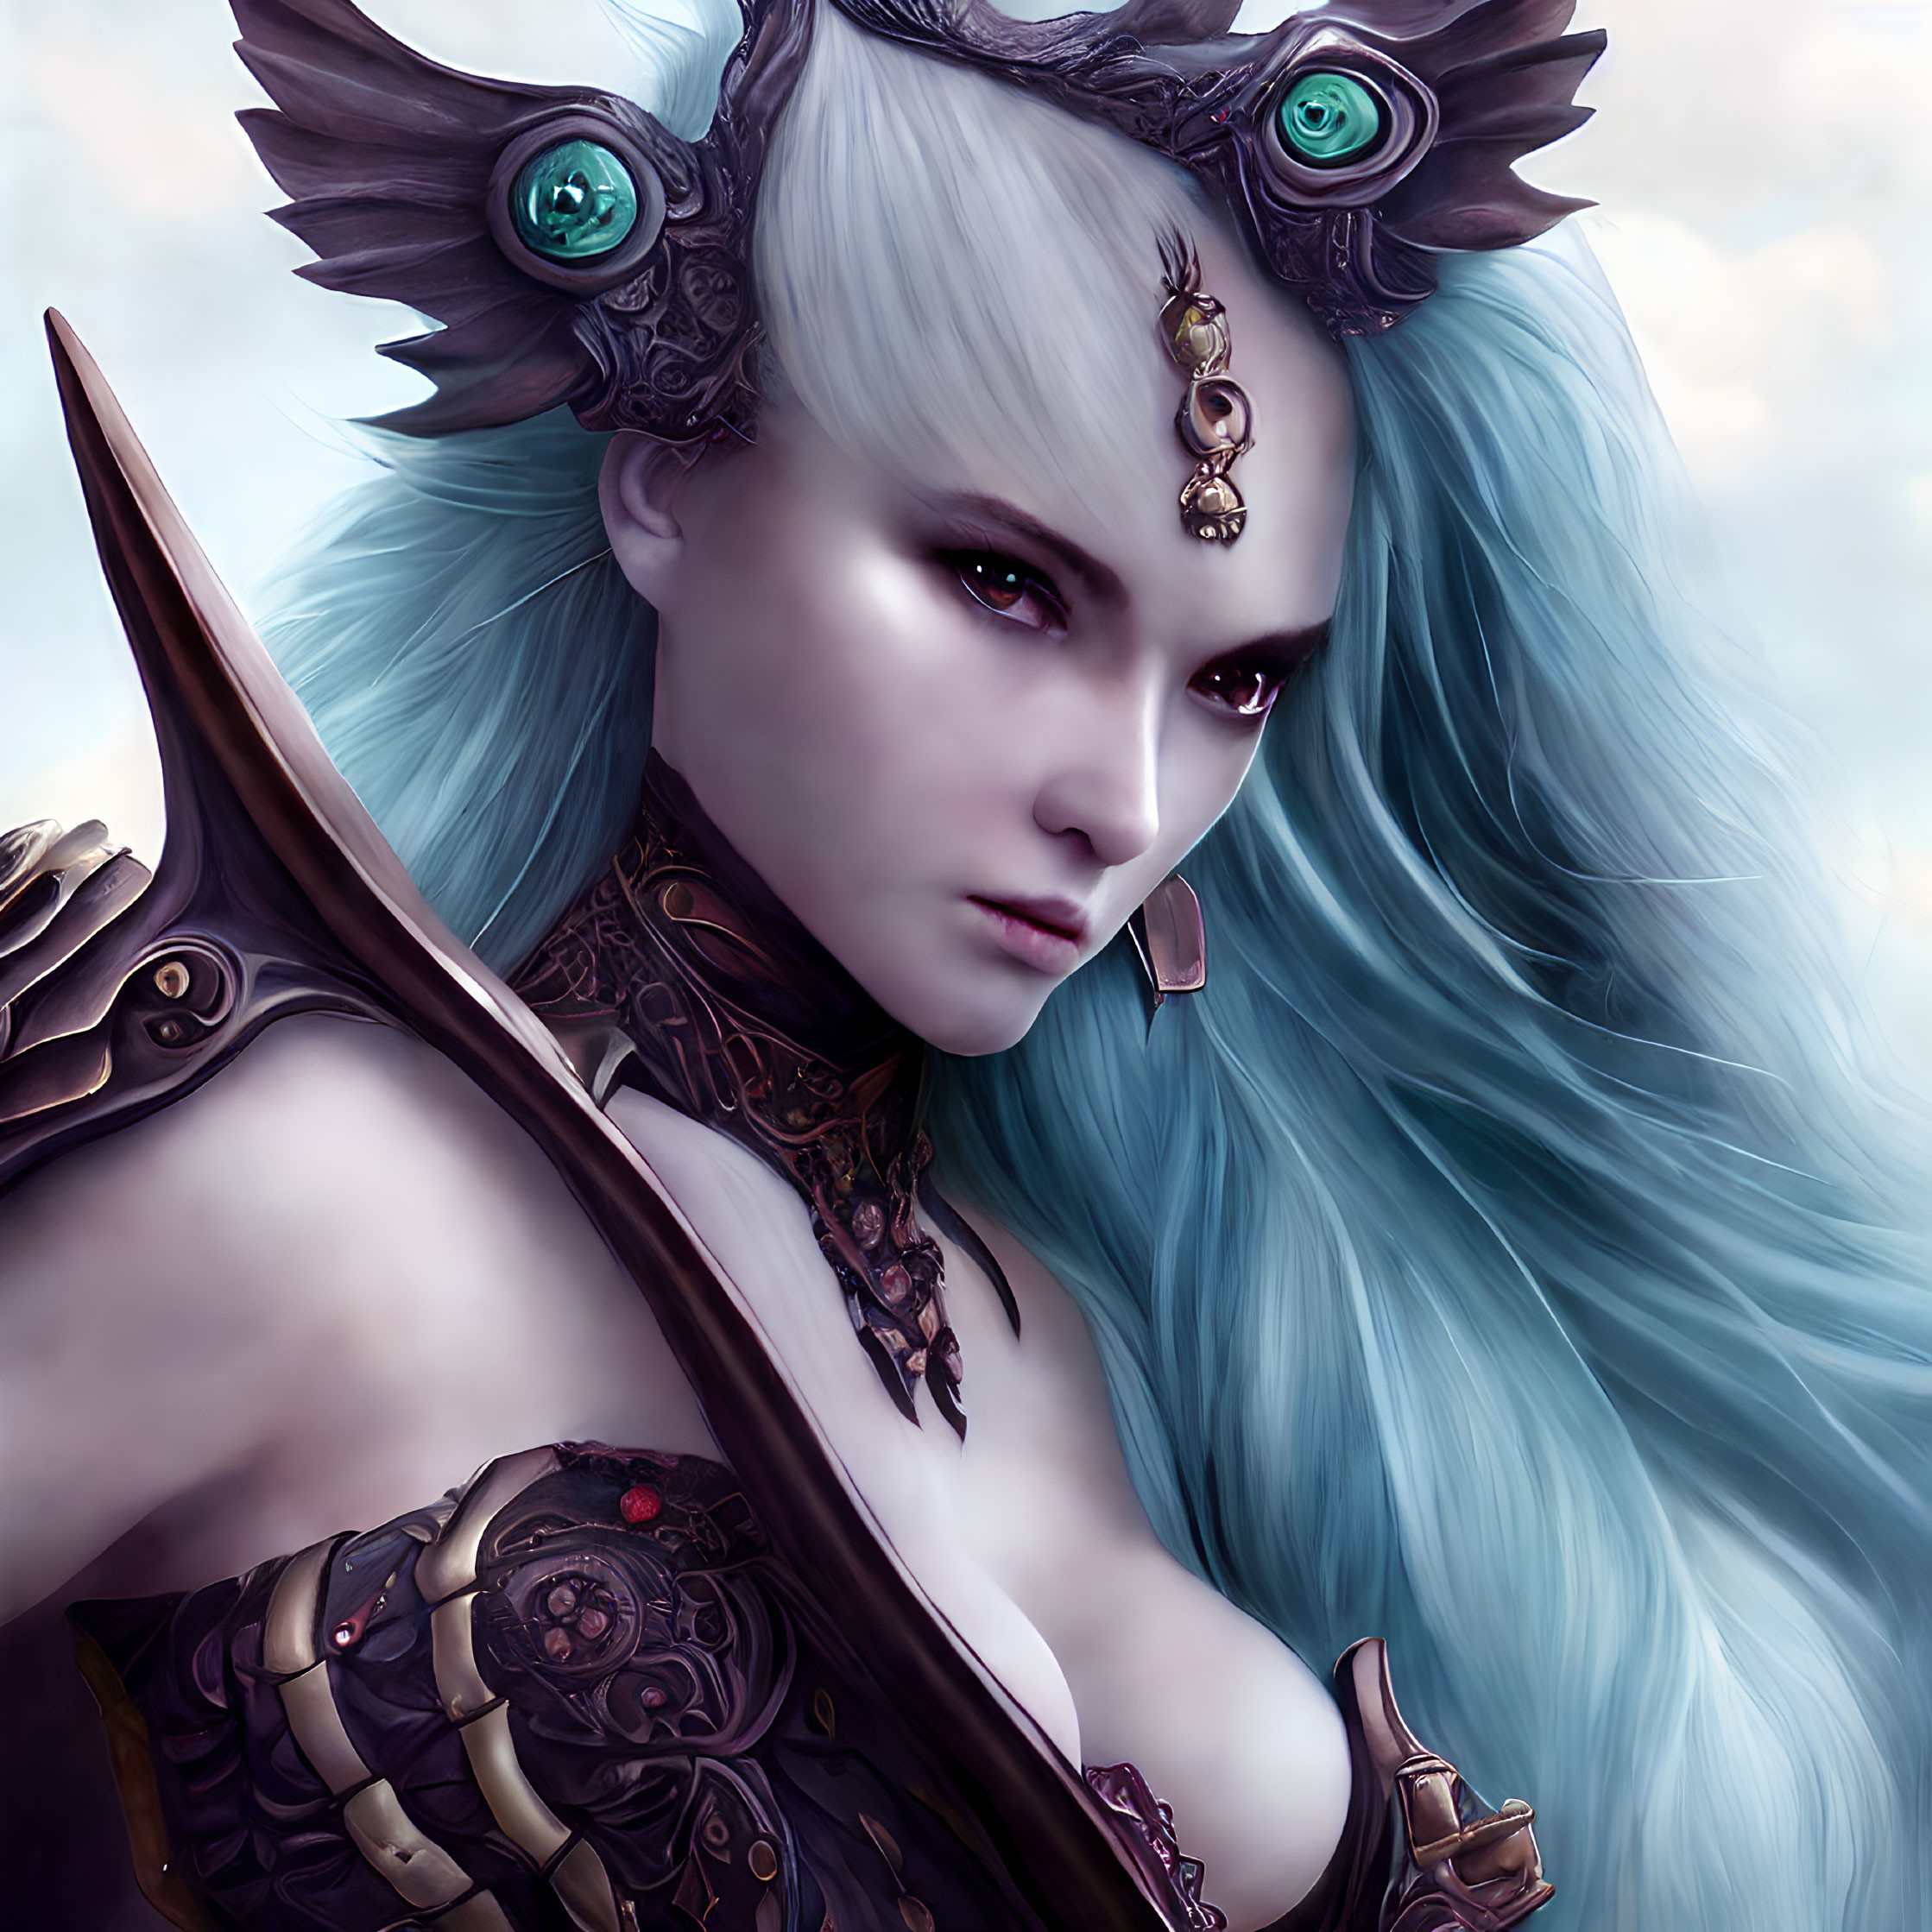 Fantasy Artwork: Pale-skinned Woman in Elaborate Owl-themed Armor